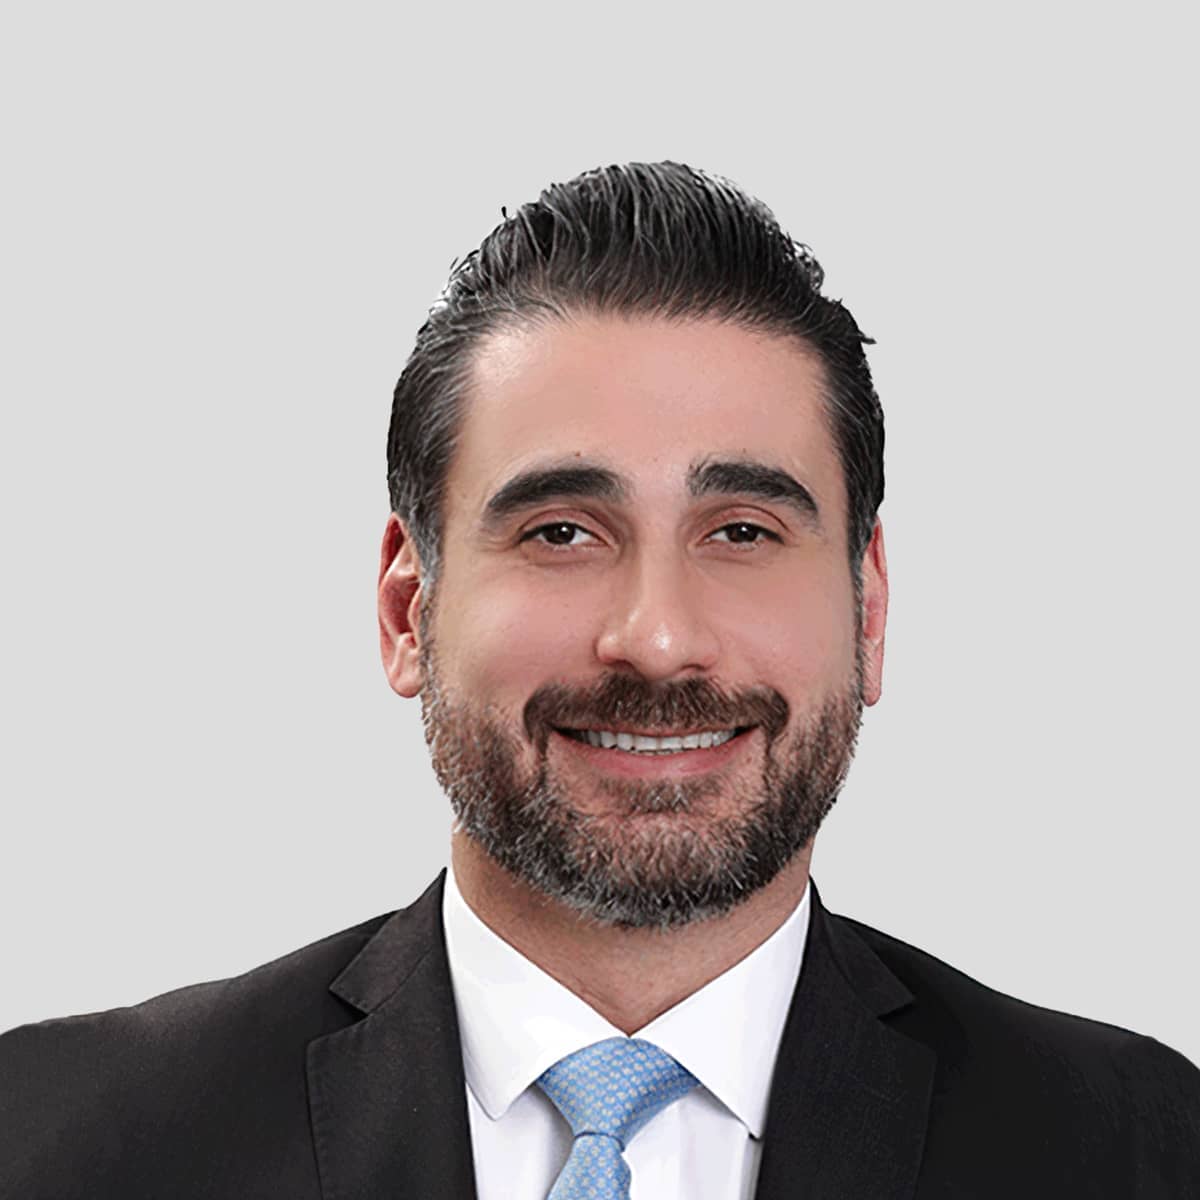 Isam Samara - Head of Marketing at Capital Bank of Jordan